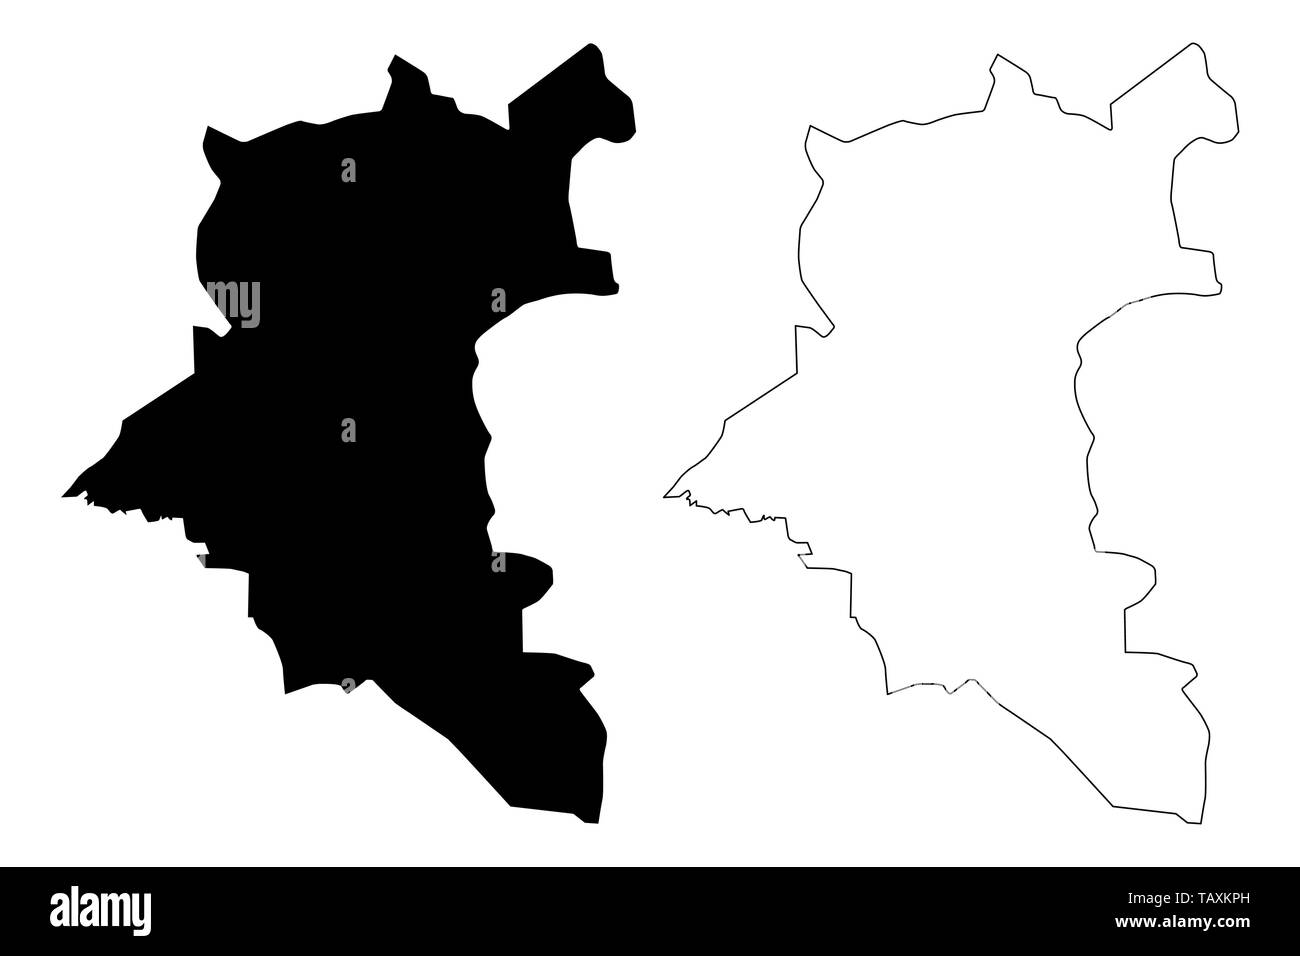 Daraa Governatorats Gouvernements Von Syrien Arabische Republik Syrien Karte Vektor Illustration Kritzeln Skizze Dar A Karte Stock Vektorgrafik Alamy